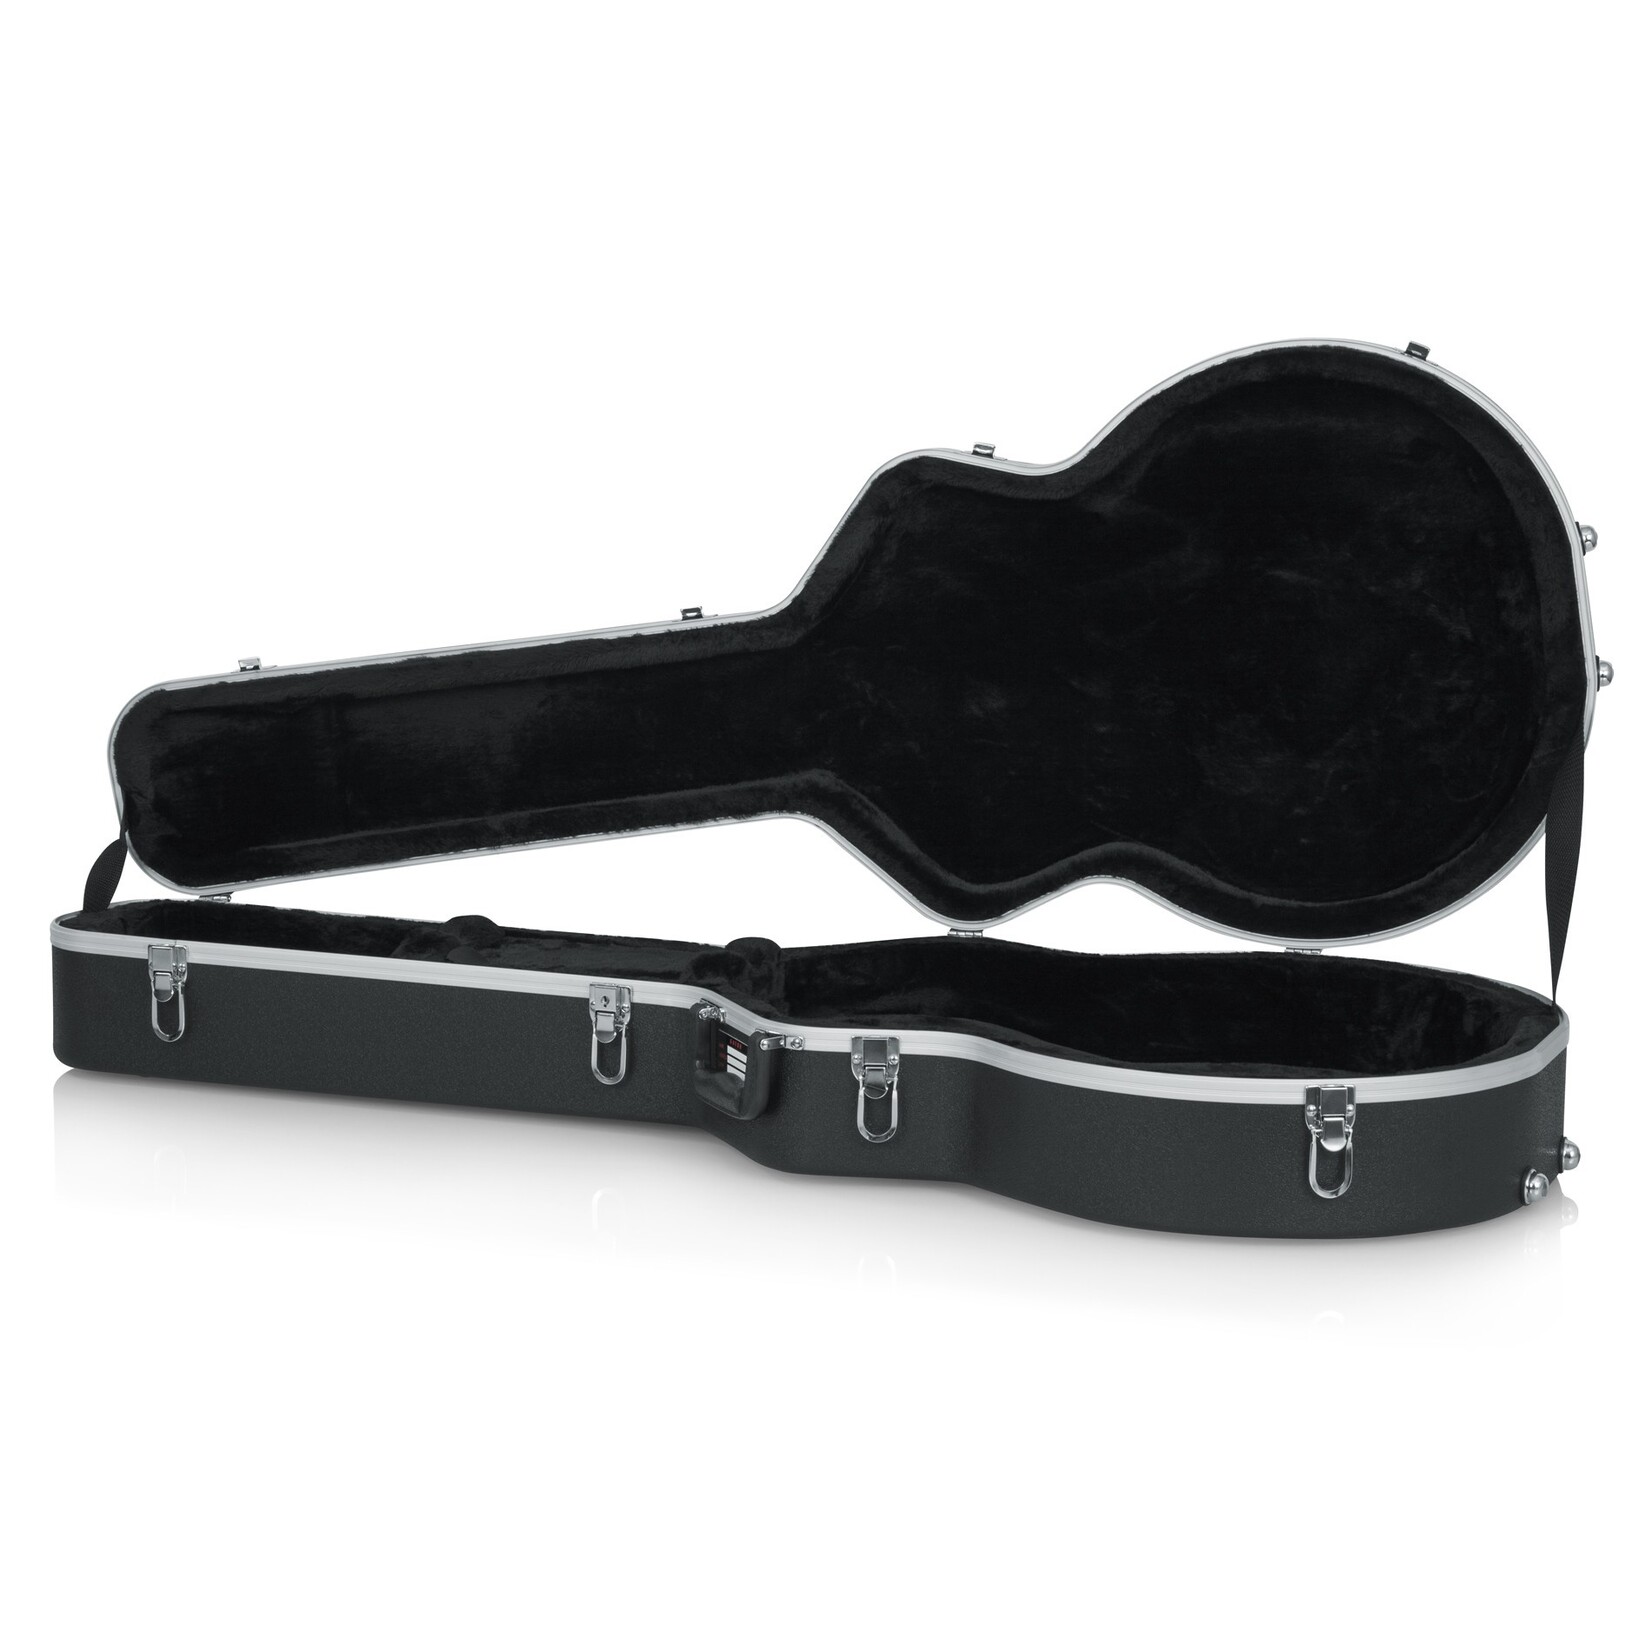 Gator GC-335 Deluxe Molded ABS Semi-Hollowbody Electric Guitar Case